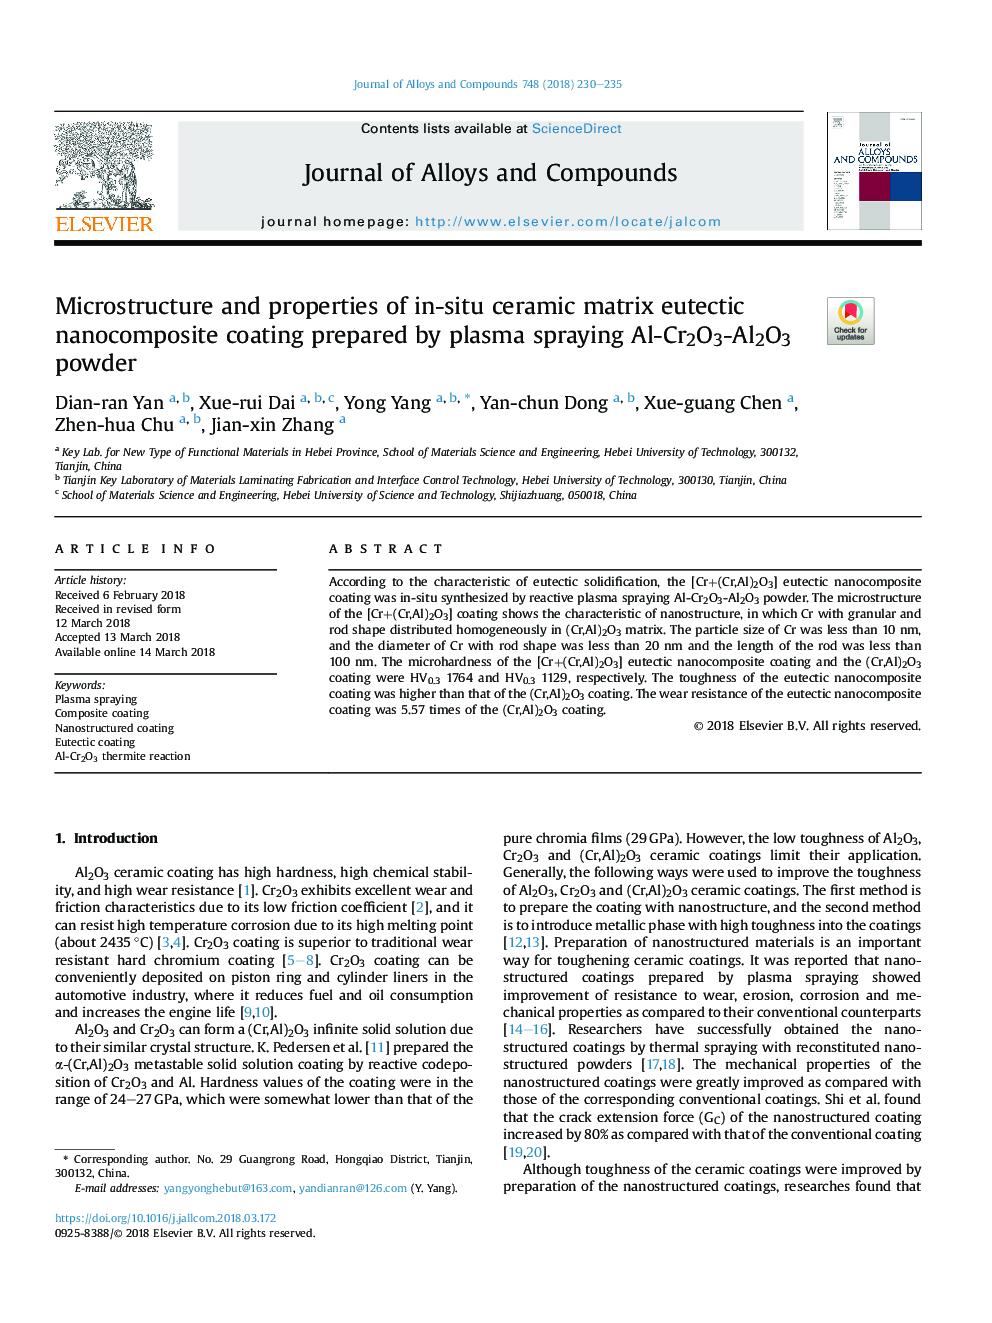 Microstructure and properties of in-situ ceramic matrix eutectic nanocomposite coating prepared by plasma spraying Al-Cr2O3-Al2O3 powder